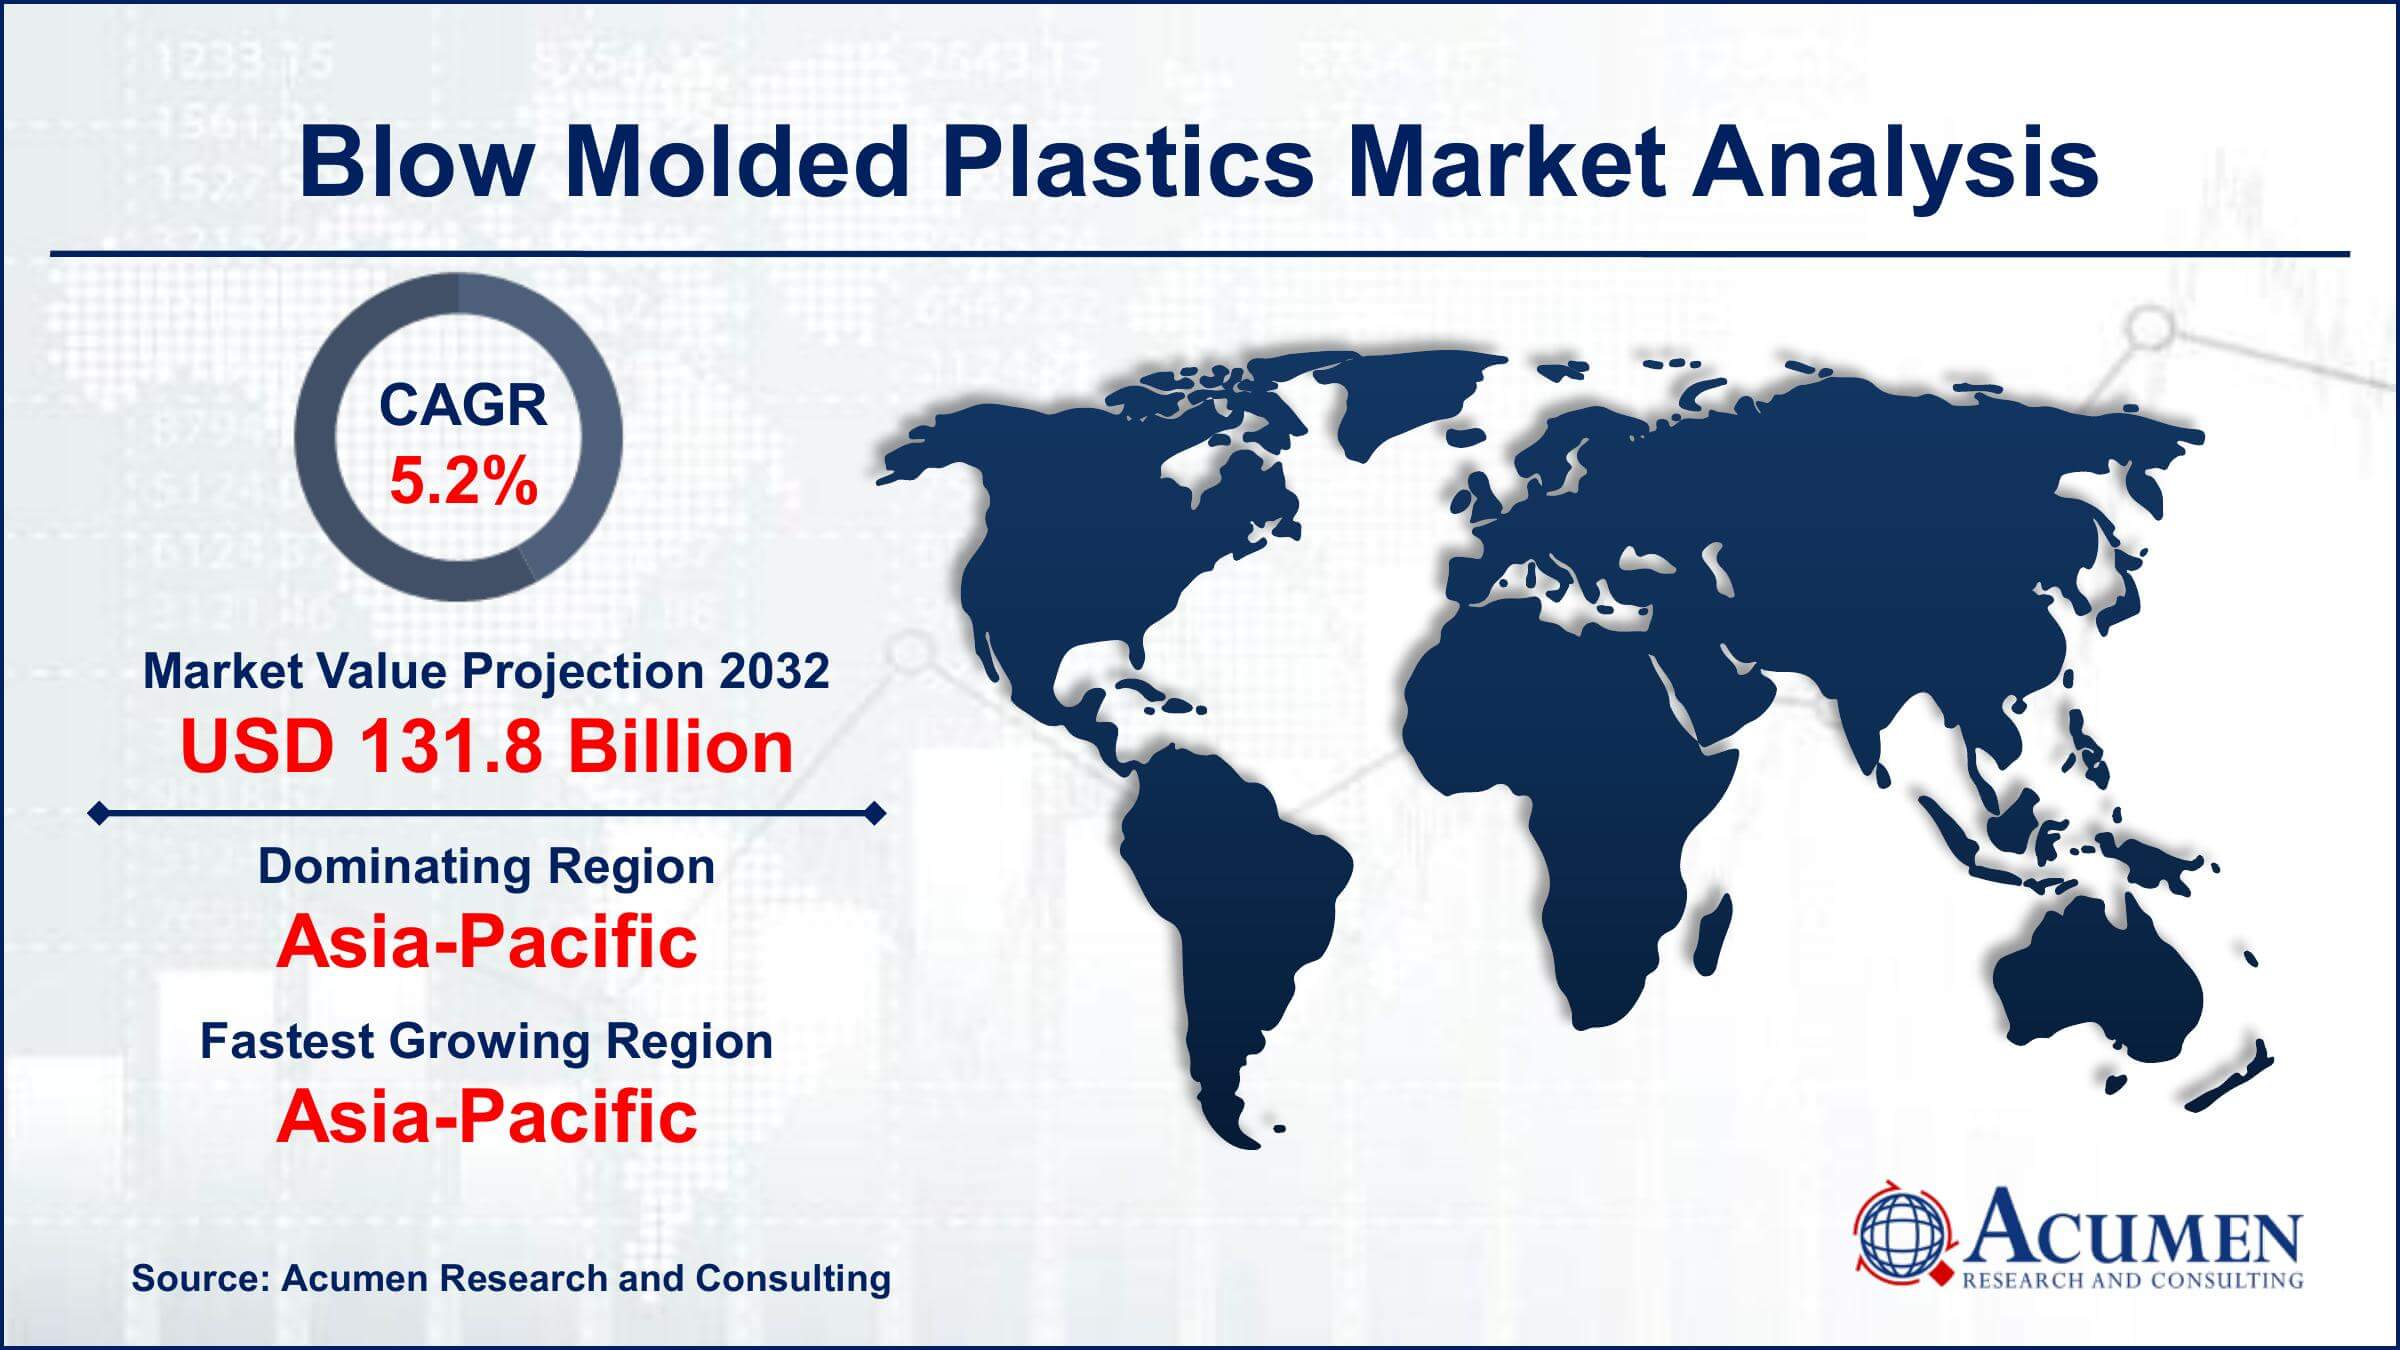 Global Blow Molded Plastics Market Trends